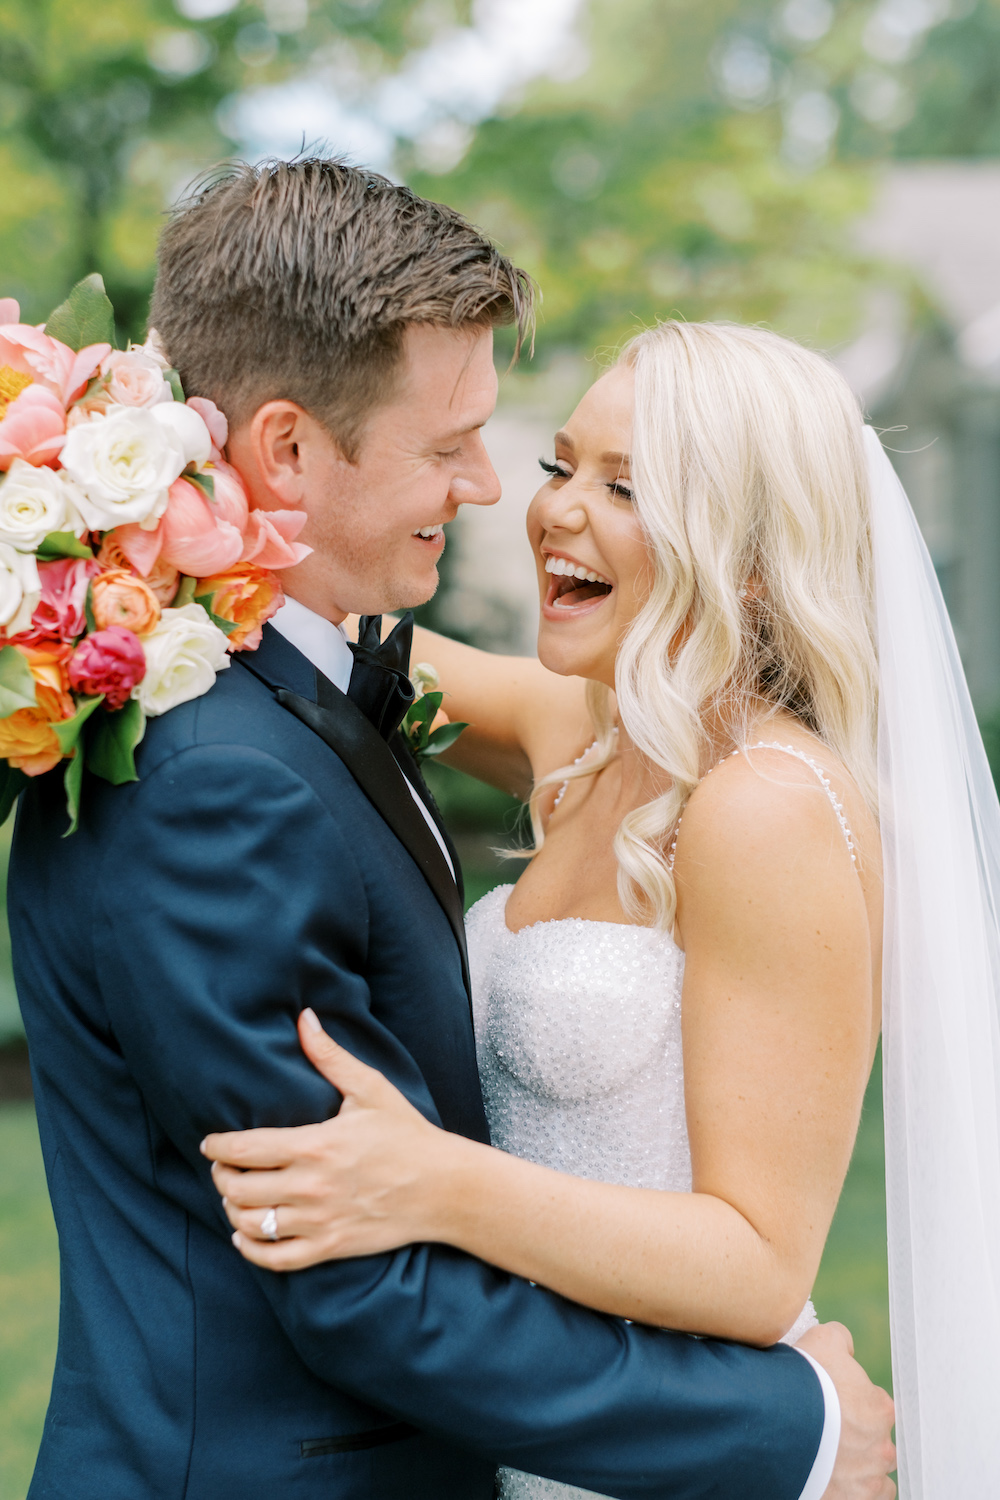 vibrant & colorful backyard wedding at The Bardot Kansas City wedding inspiration